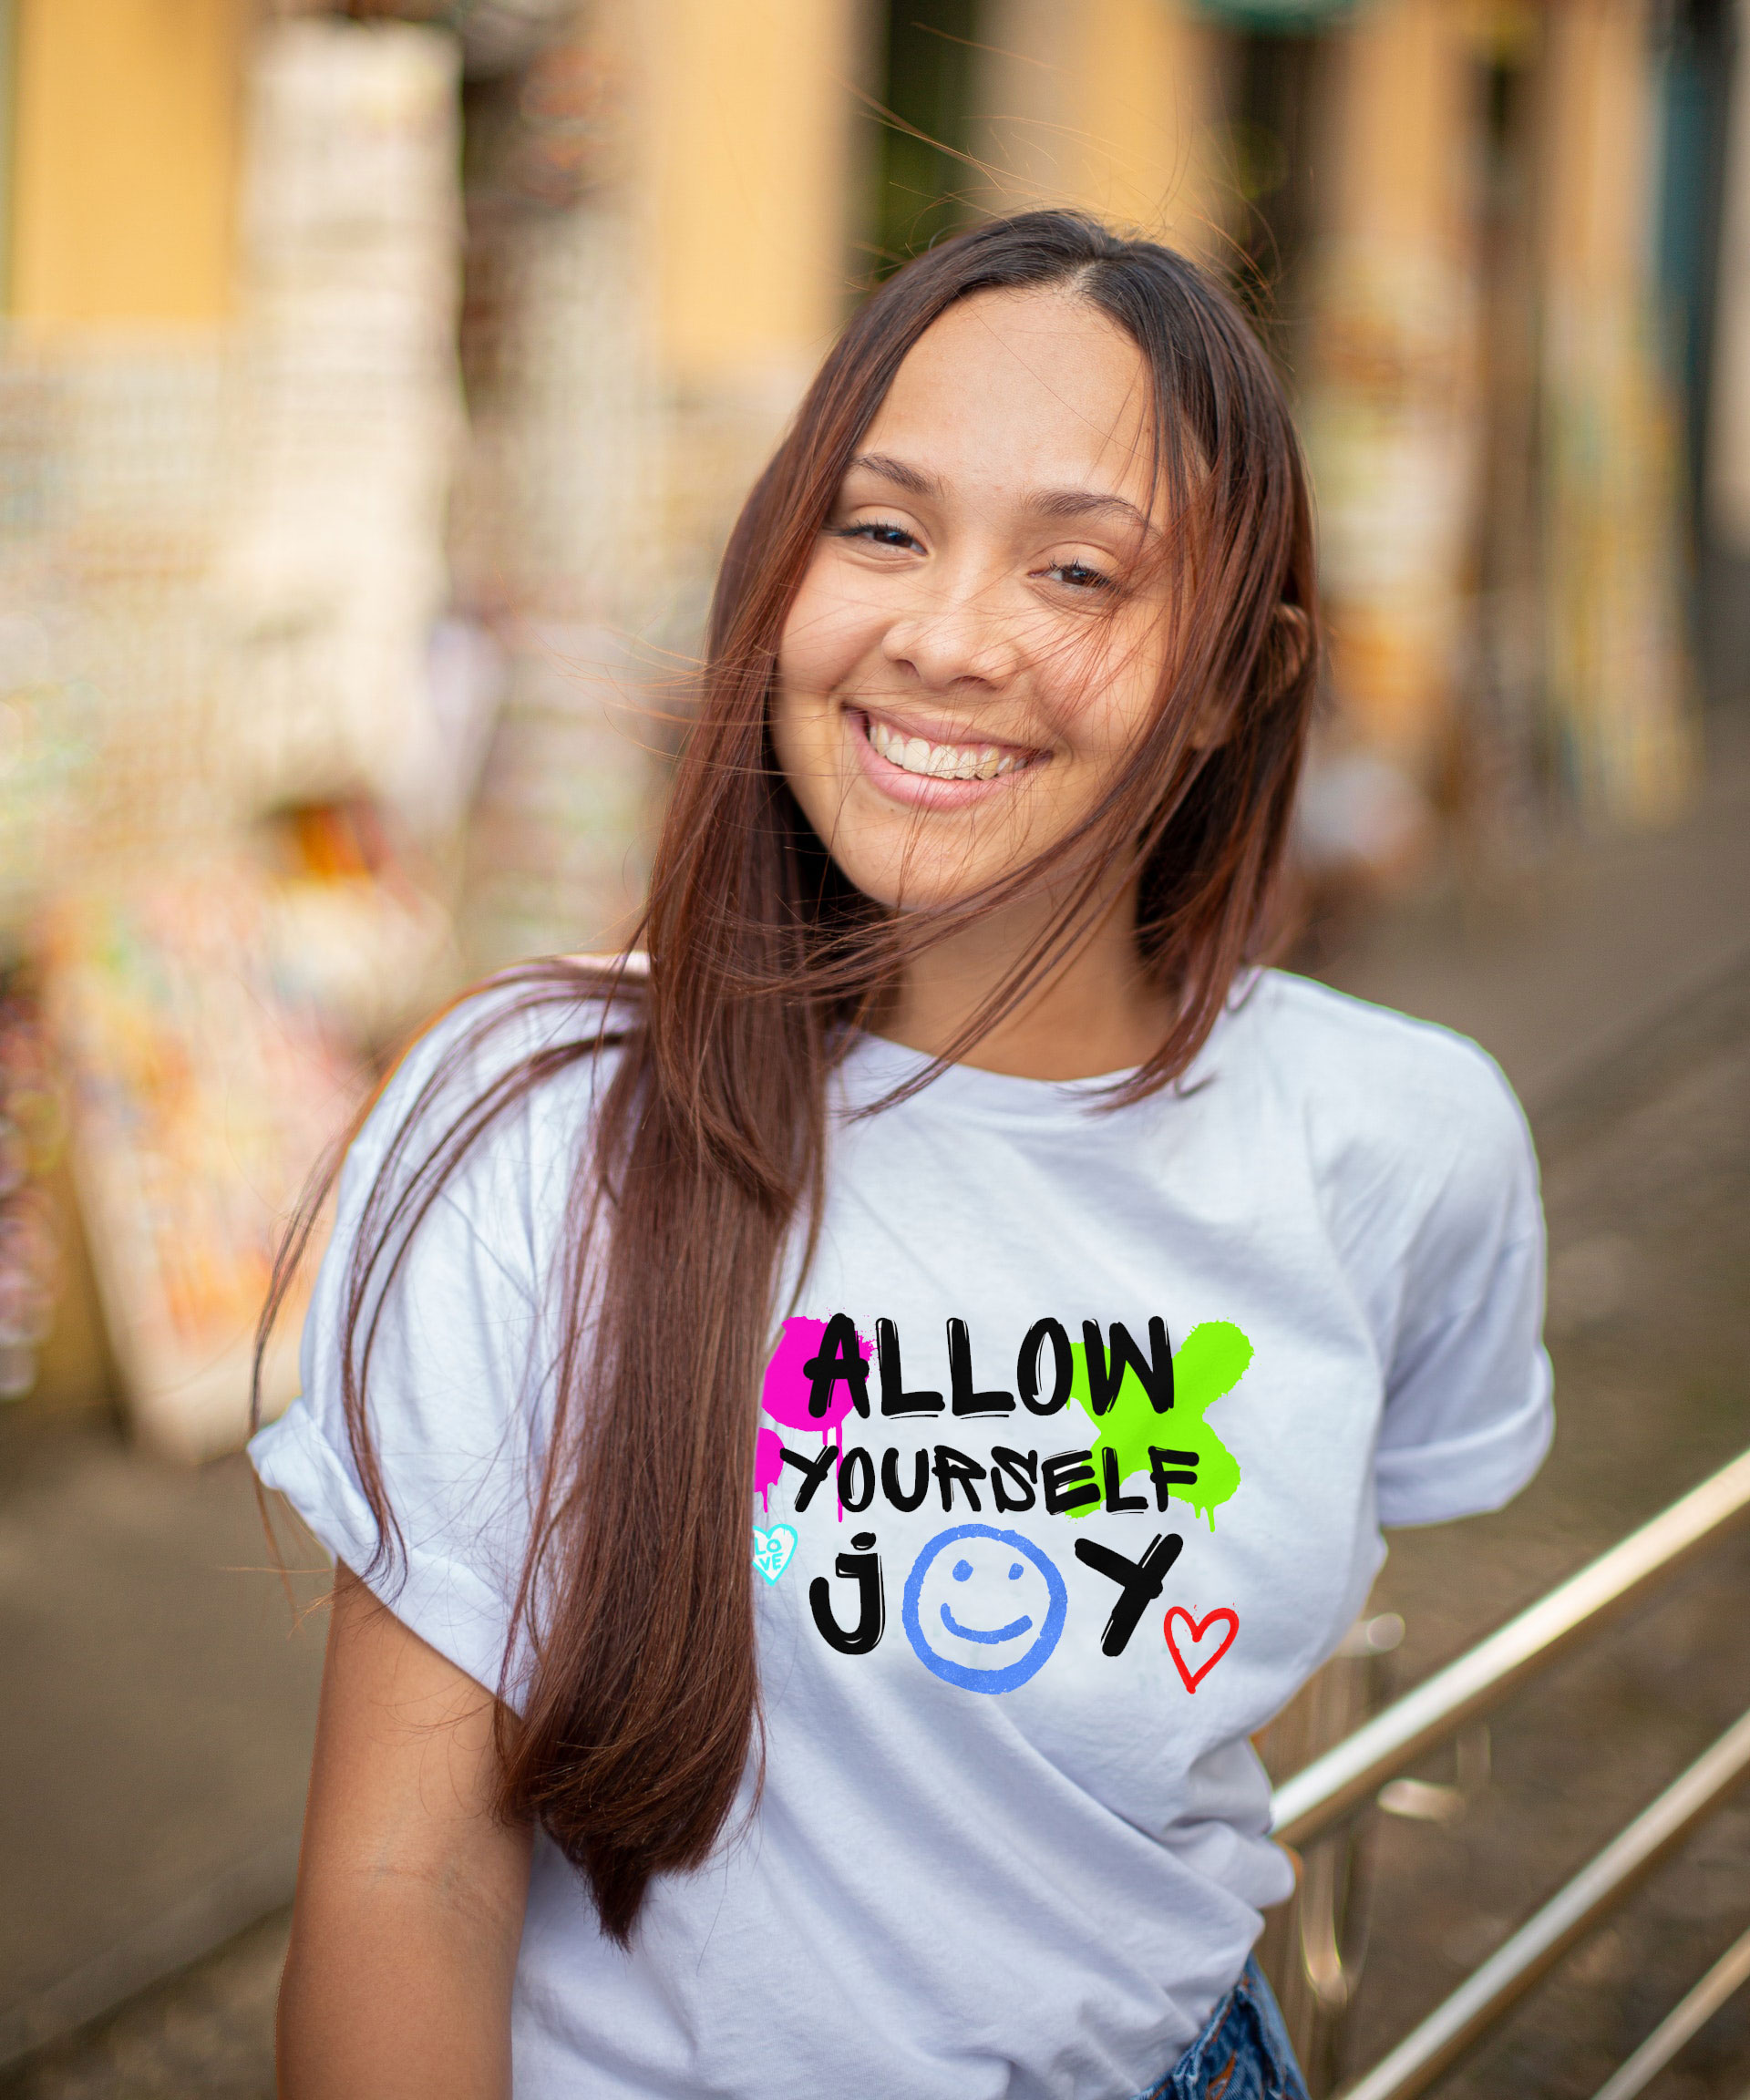 “Allow yourself joy” – Lockeres Damen-T-Shirt